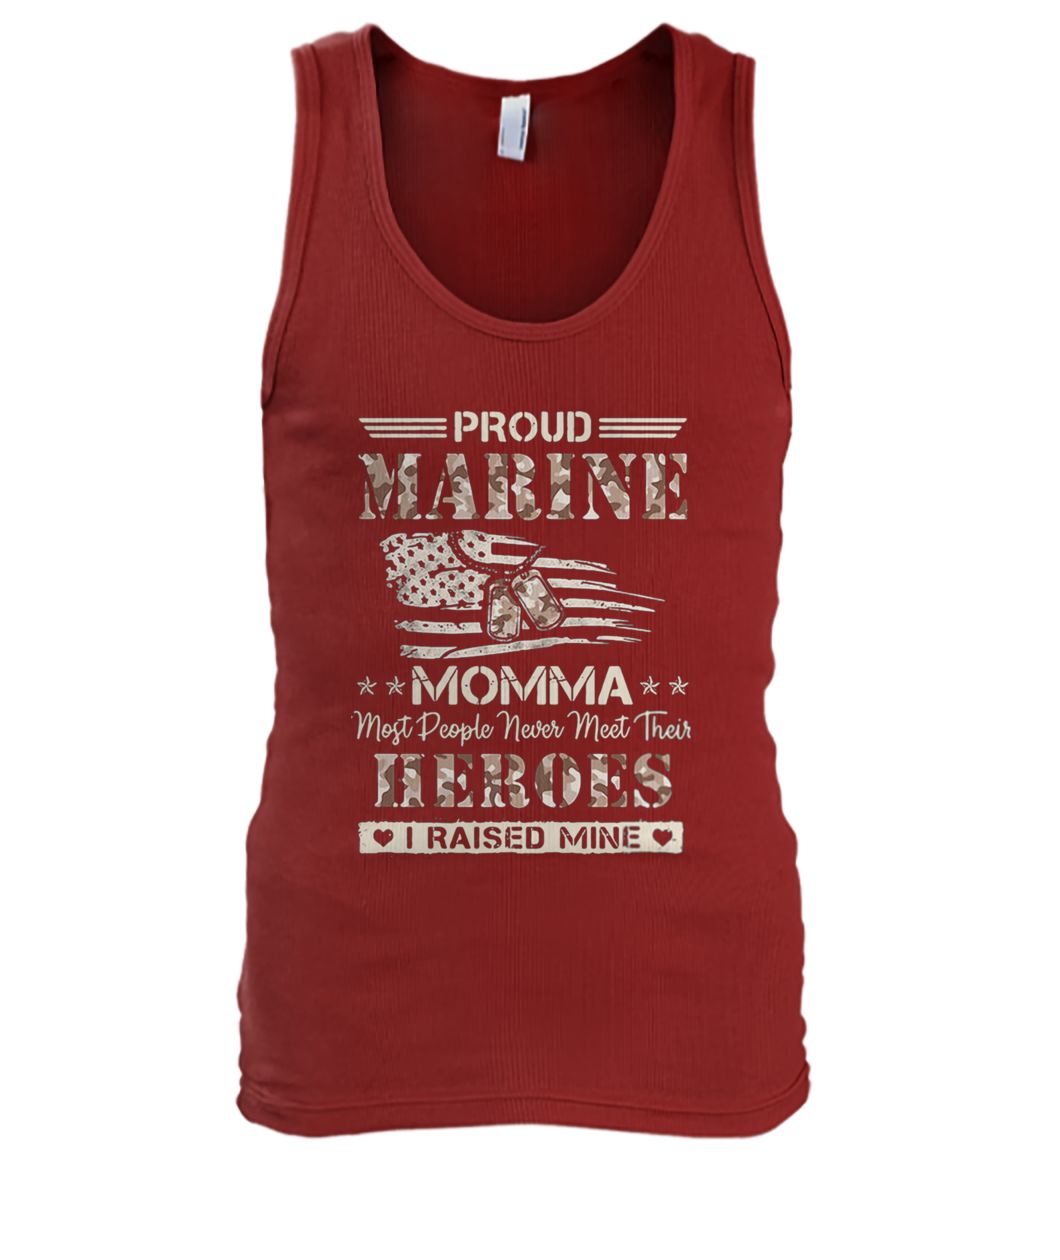 Proud marine momma most people never meet their heroes I raised mine men's tank top